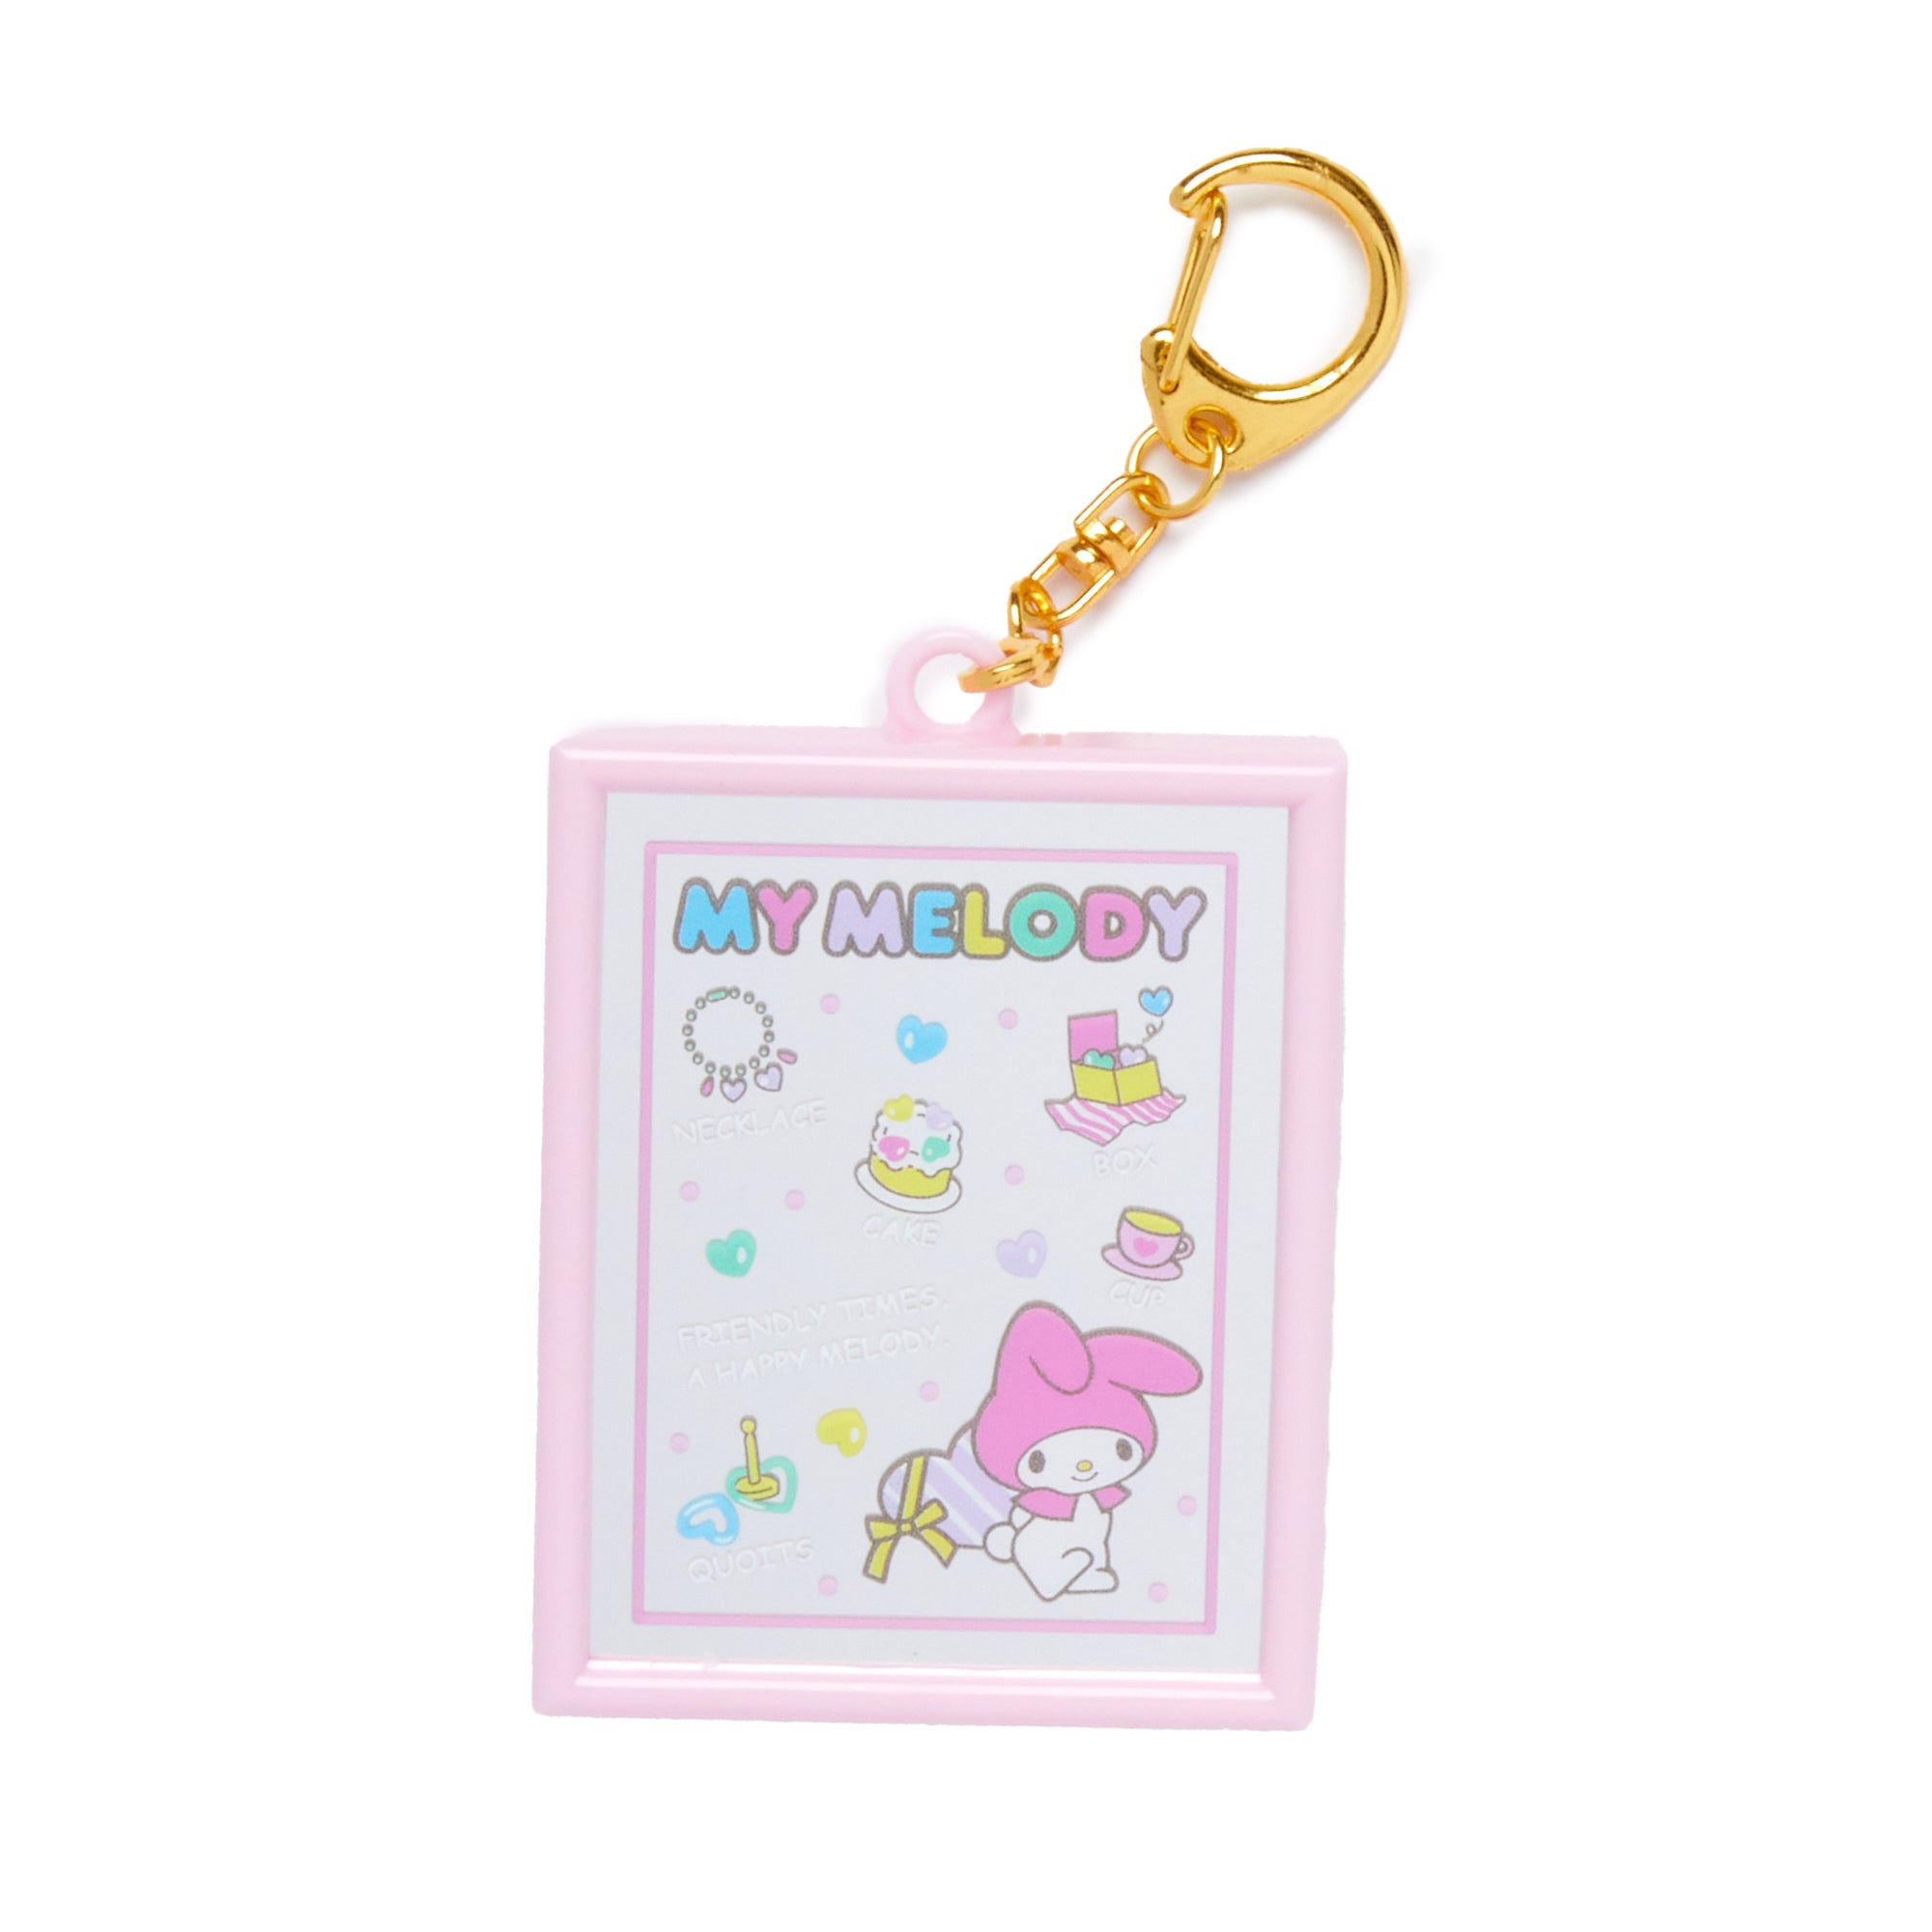 My Melody Mirror Keychain Accessory Japan Original   